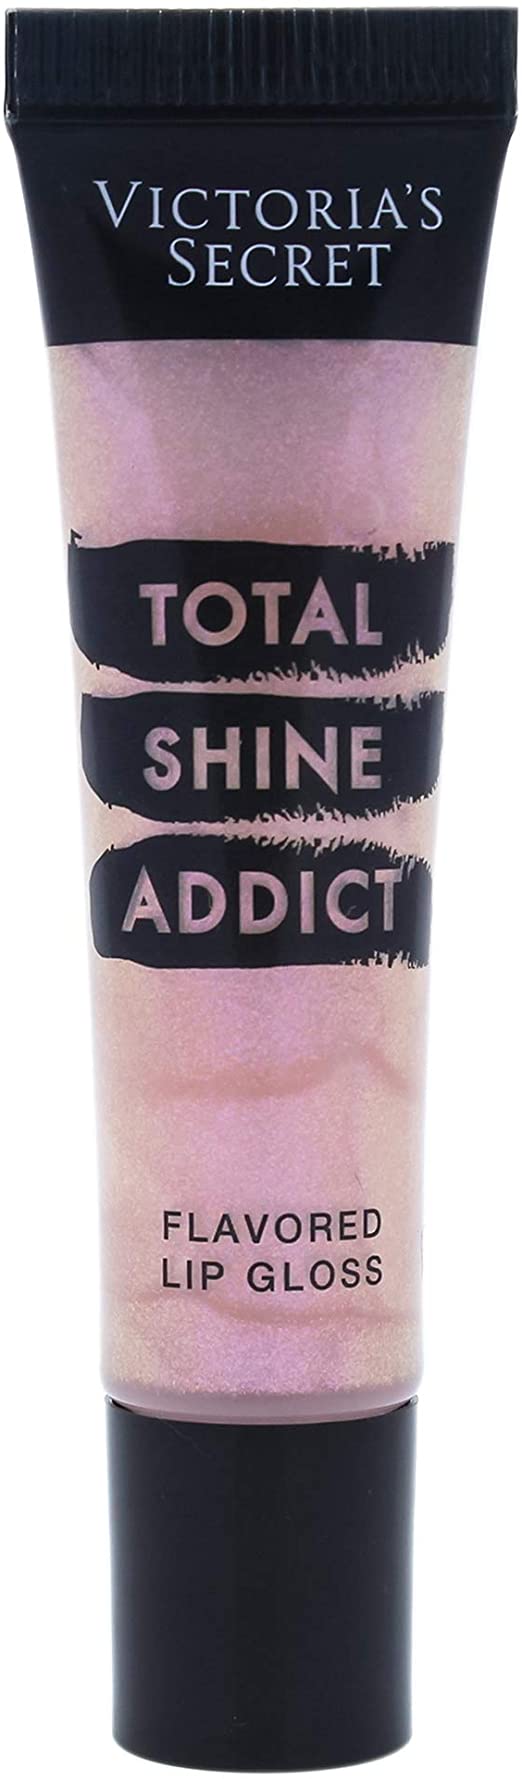 Victoria's Secret Total Shine Addict Flavored Lip Gloss Indulgence